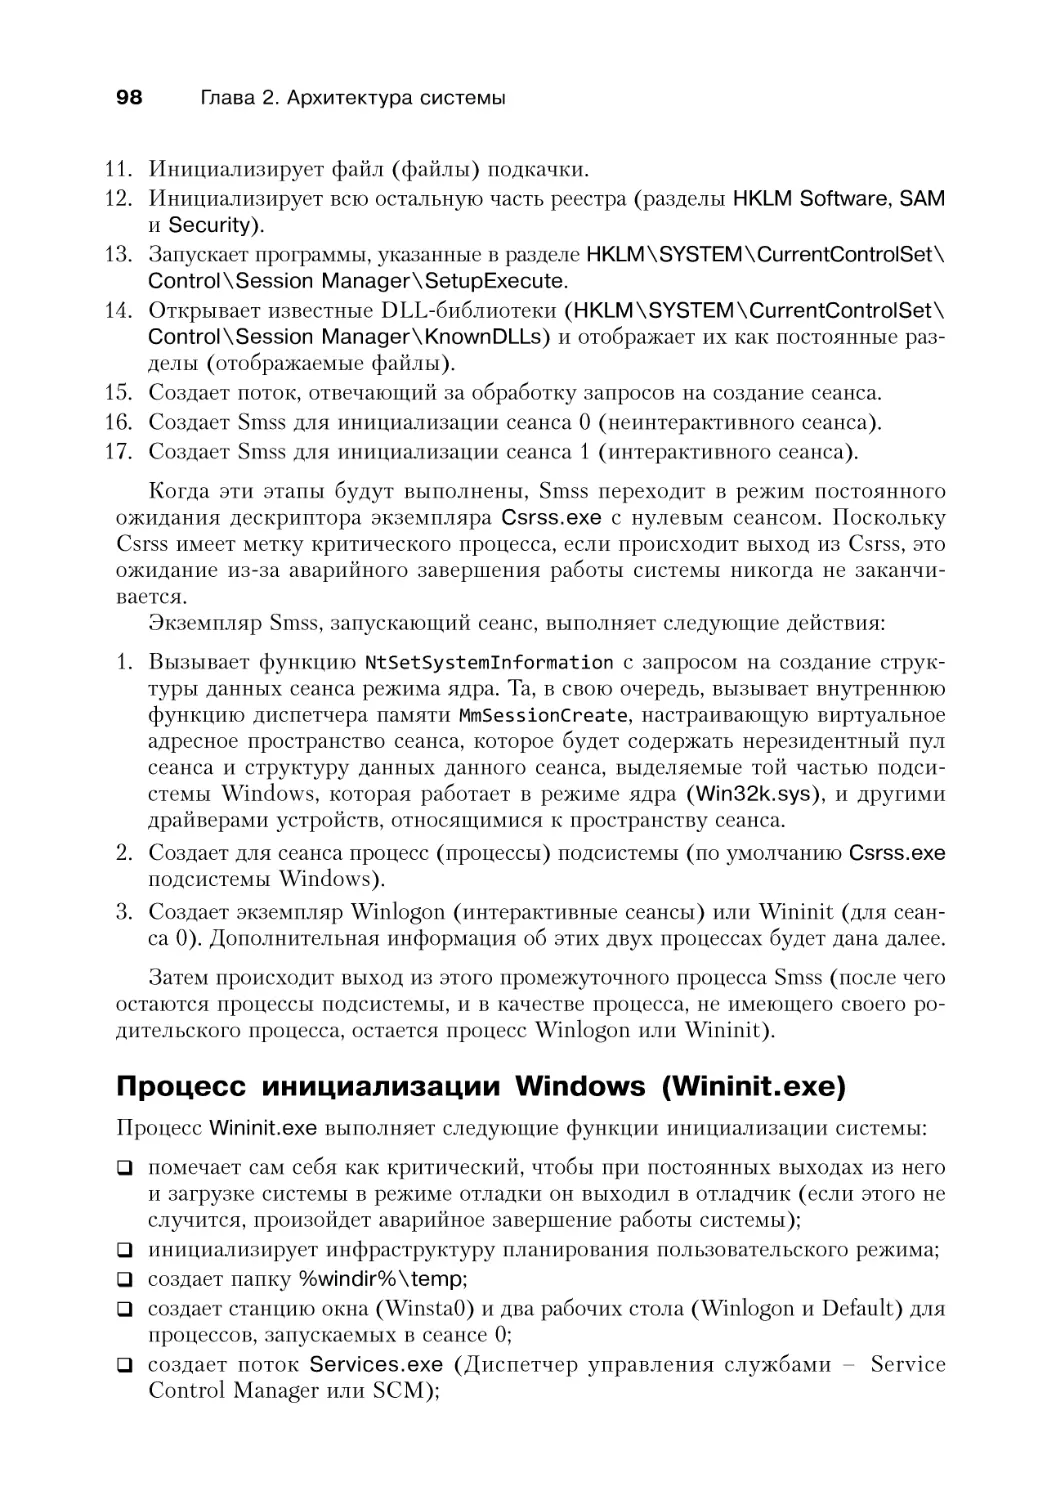 Процесс инициализации Windows (Wininit.exe)